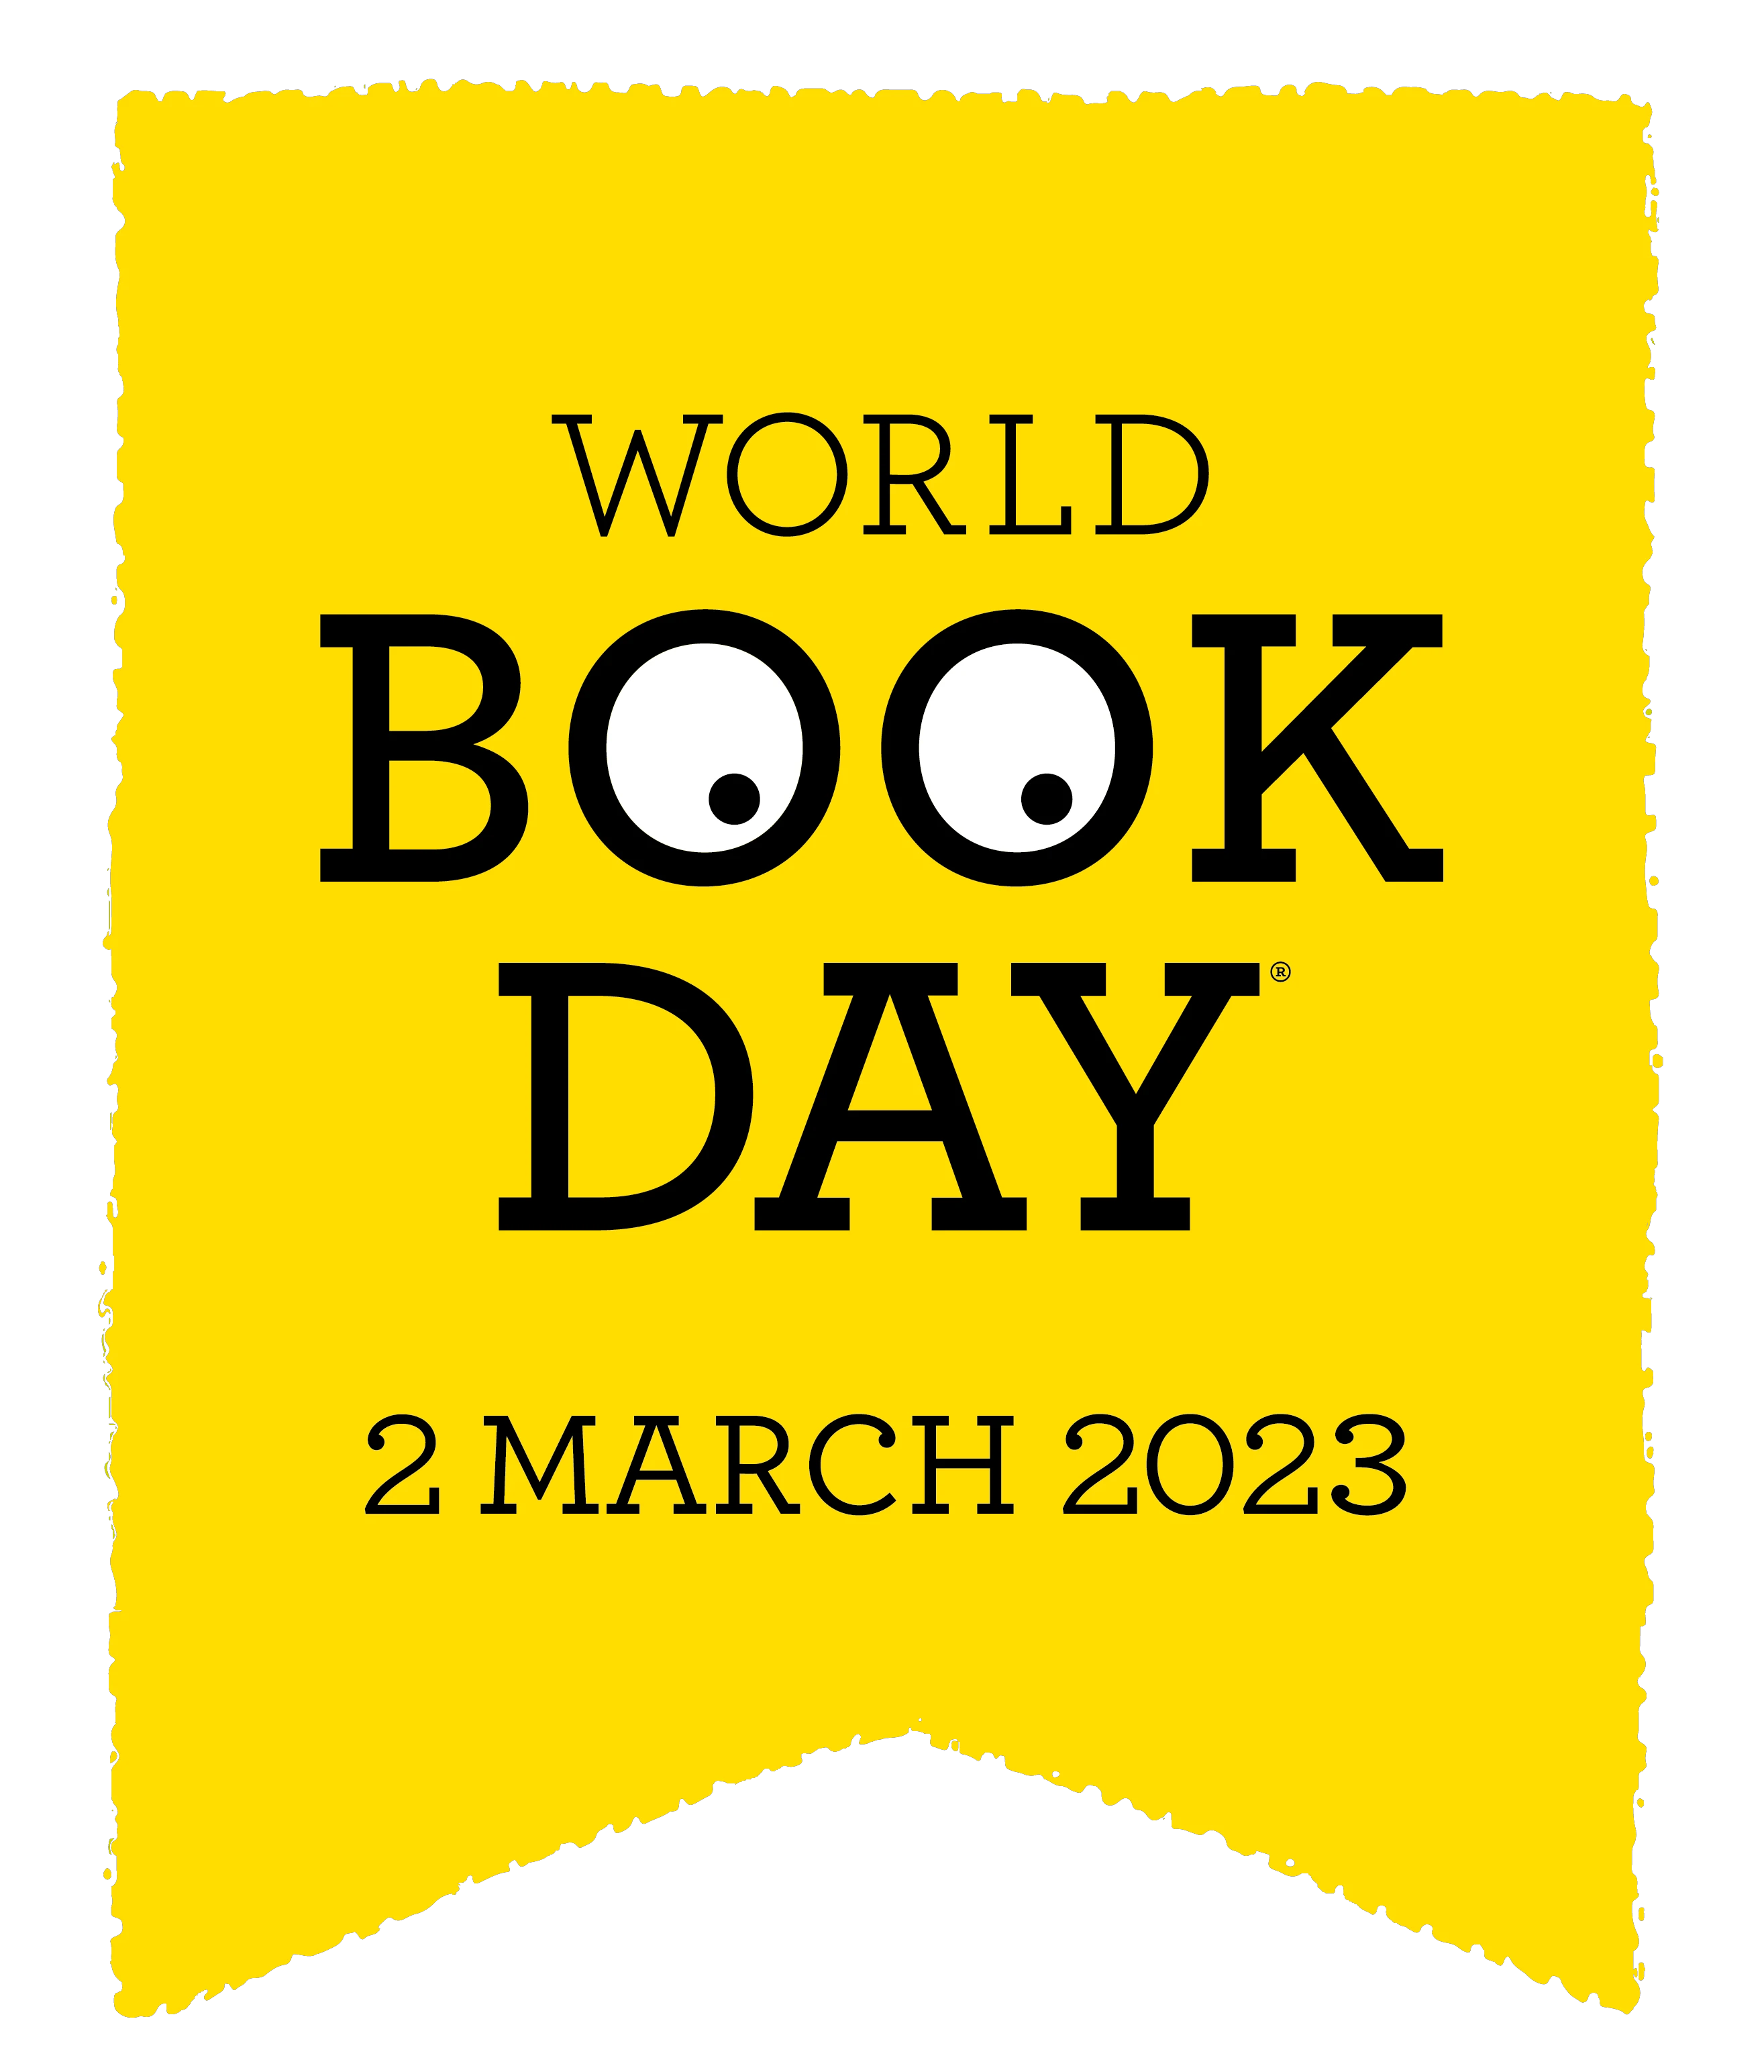 worldbookday.com